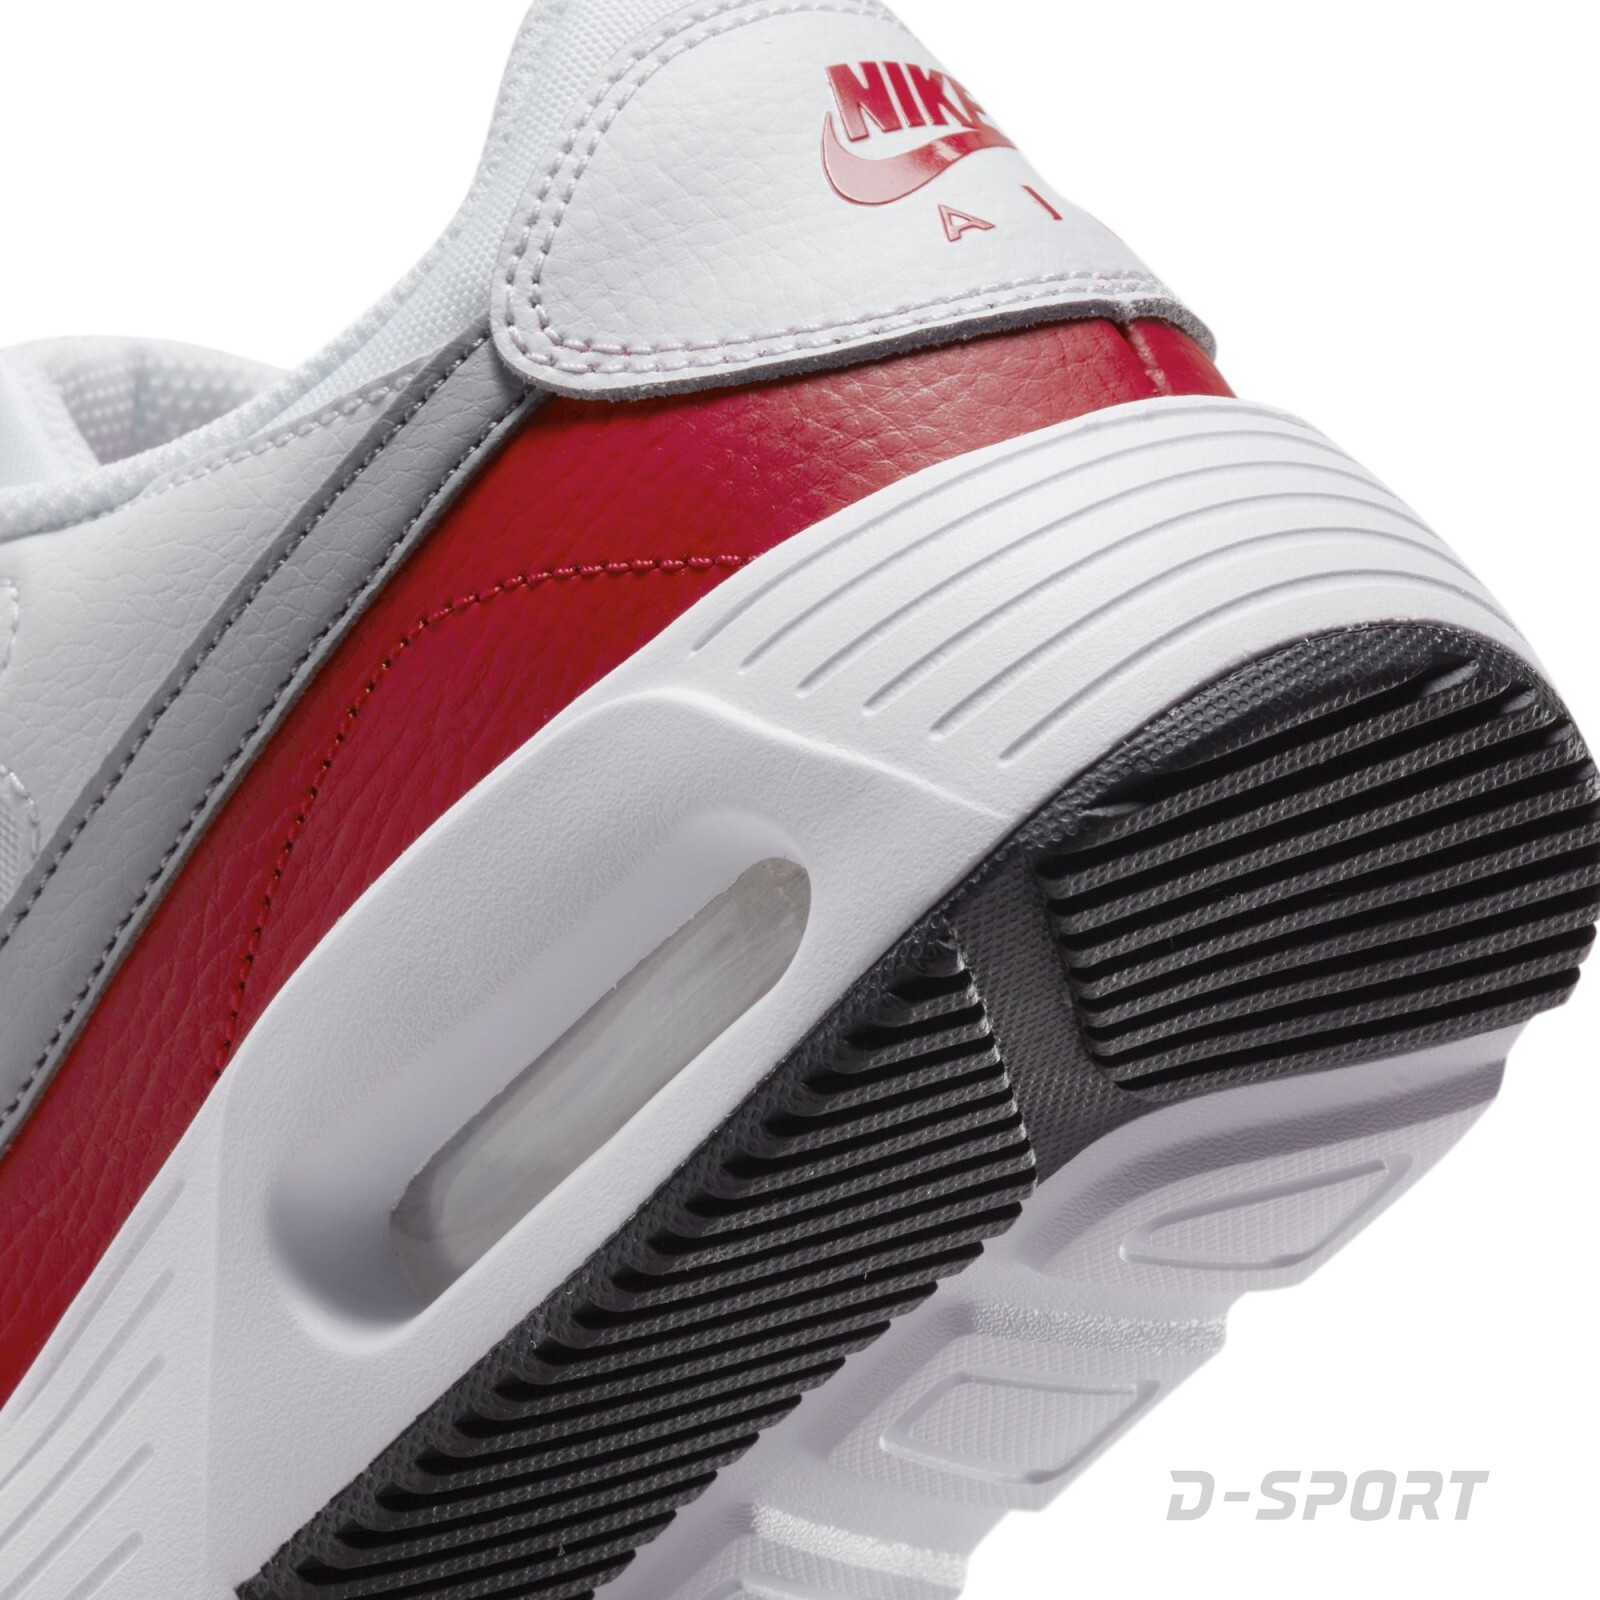 Nike Air Max SC